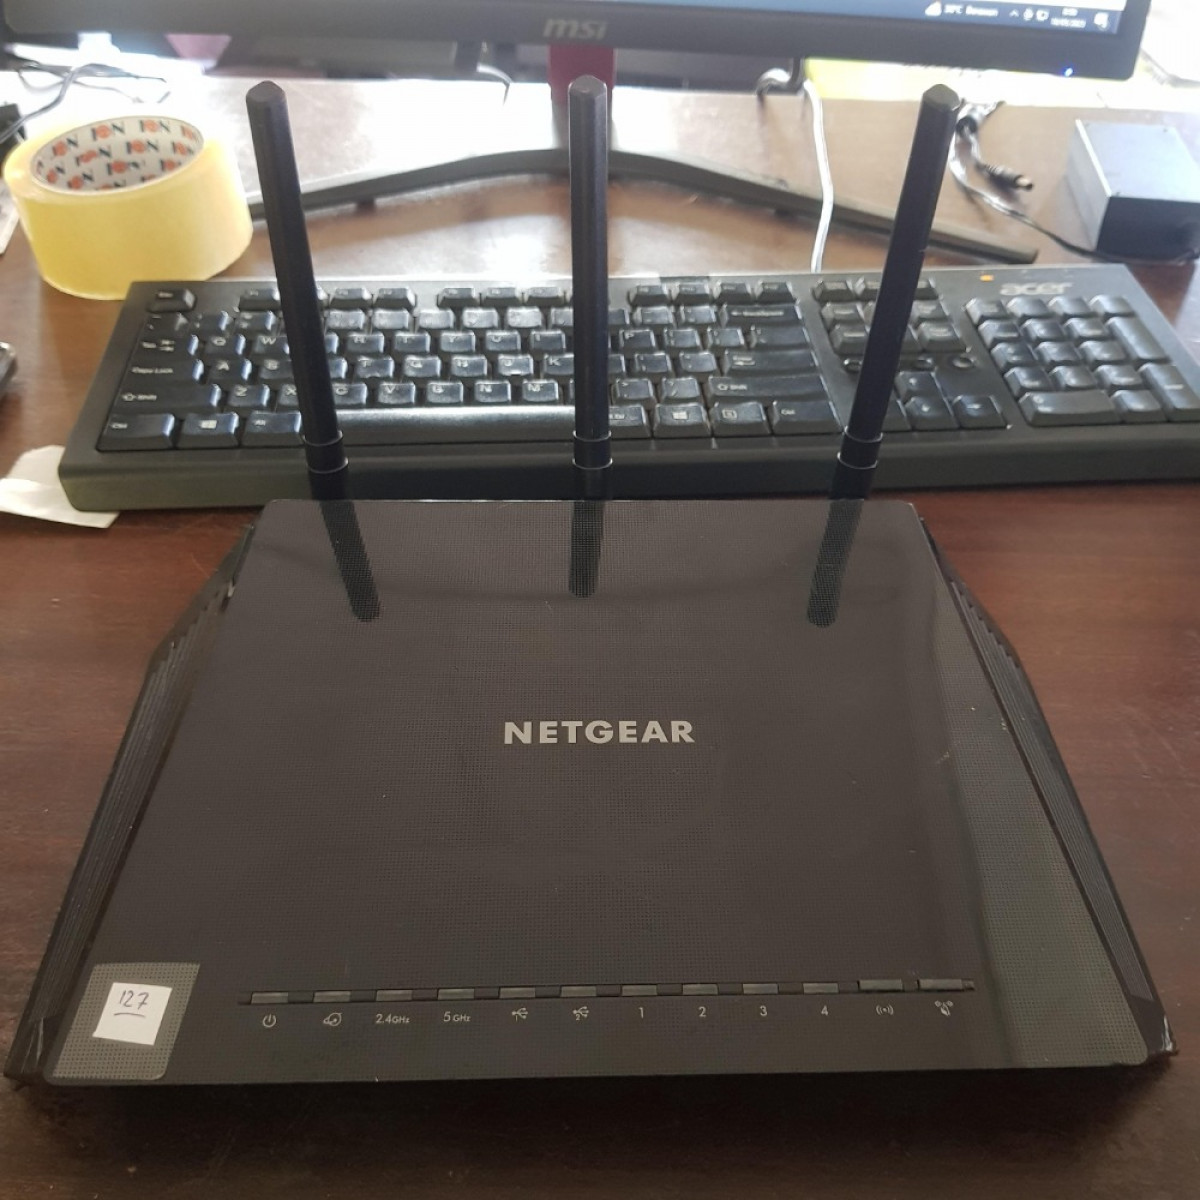 Netgear R6400v2 AC1750 Smart WiFi Router 802.11ac Dual Band Gigabit